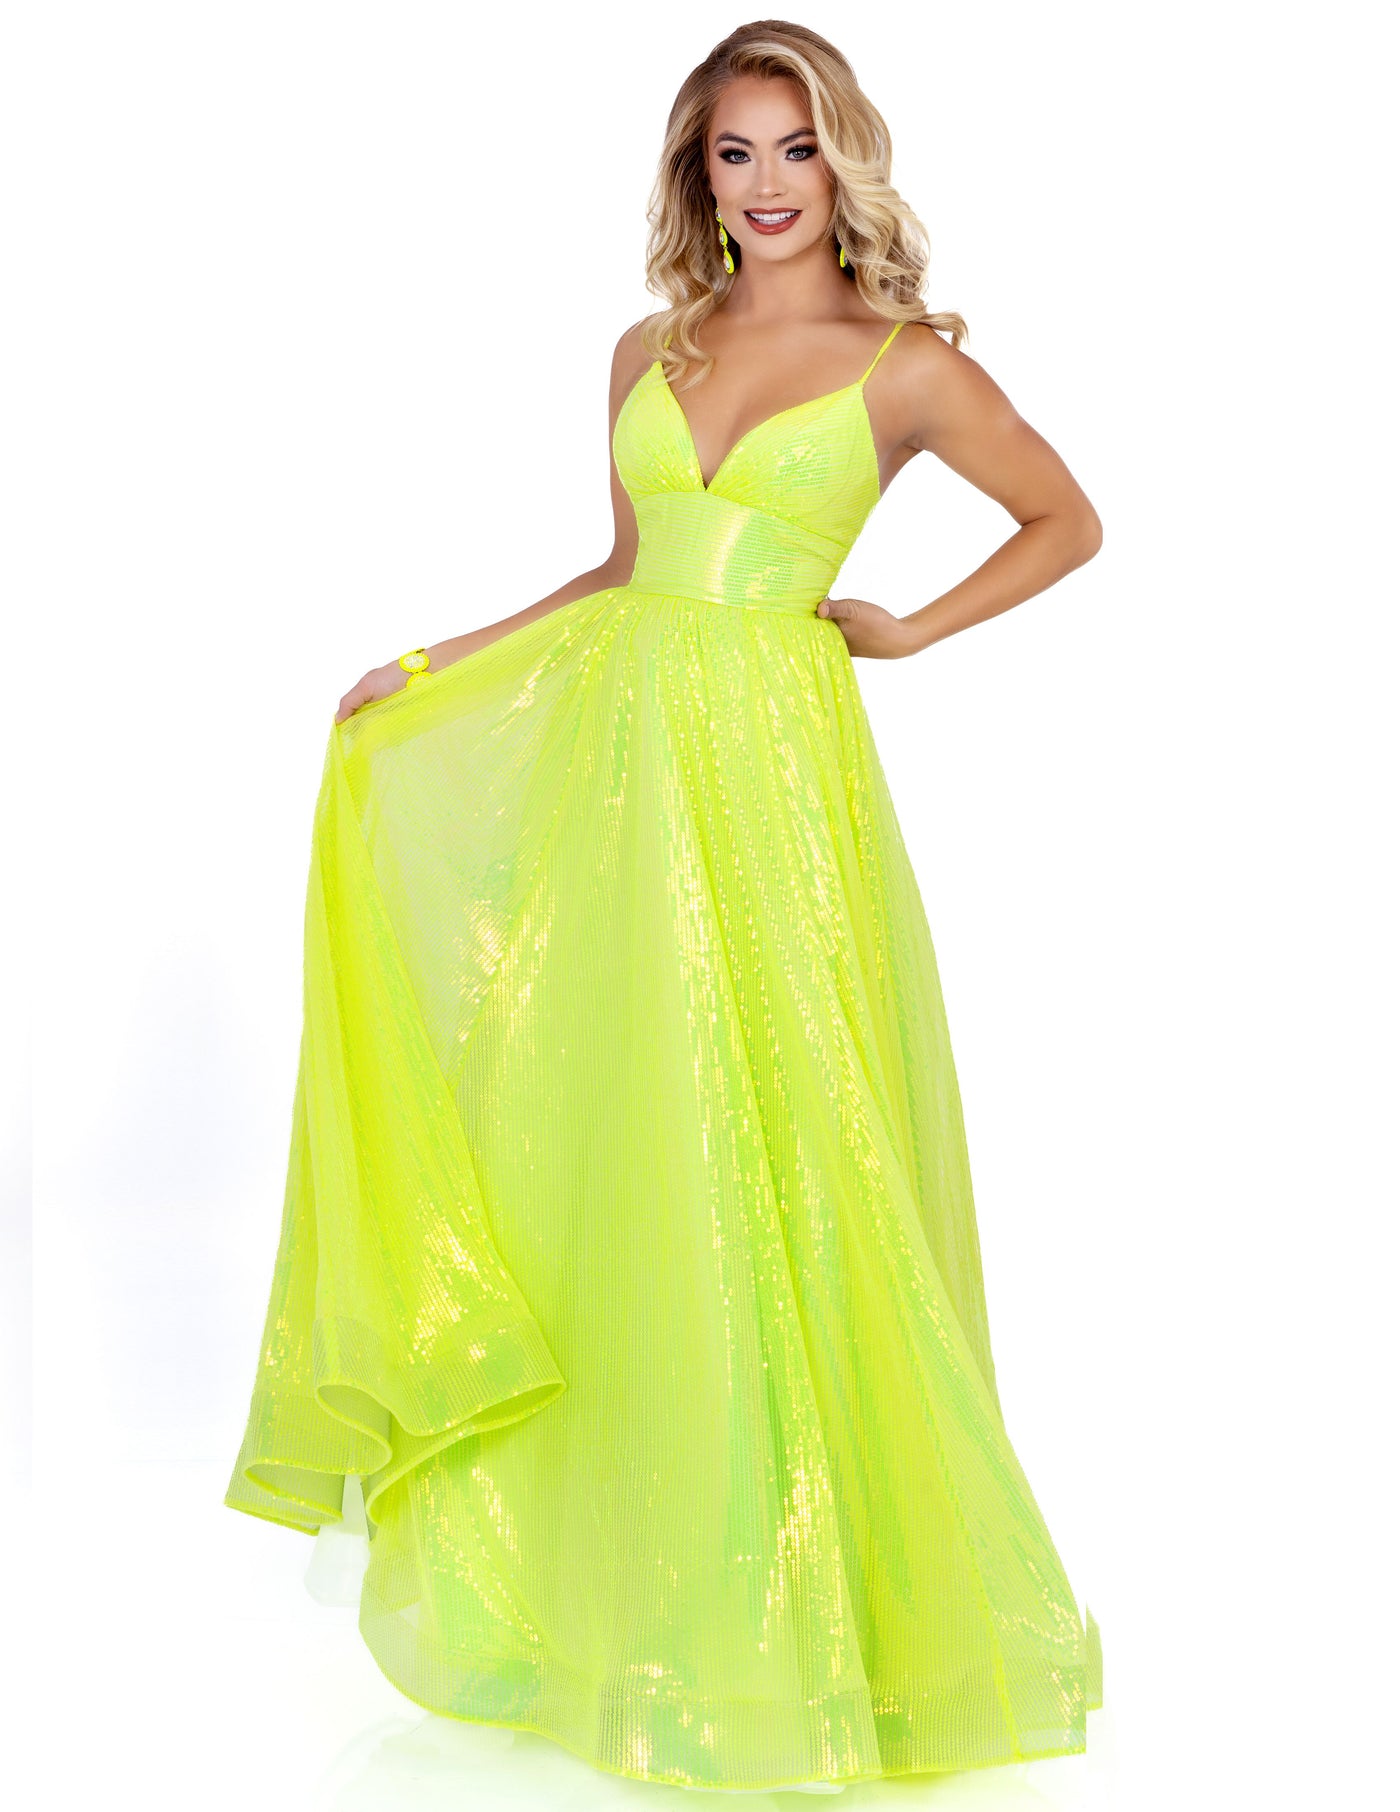 Cecilia Couture 1500 Lemon Lime Prom Dress